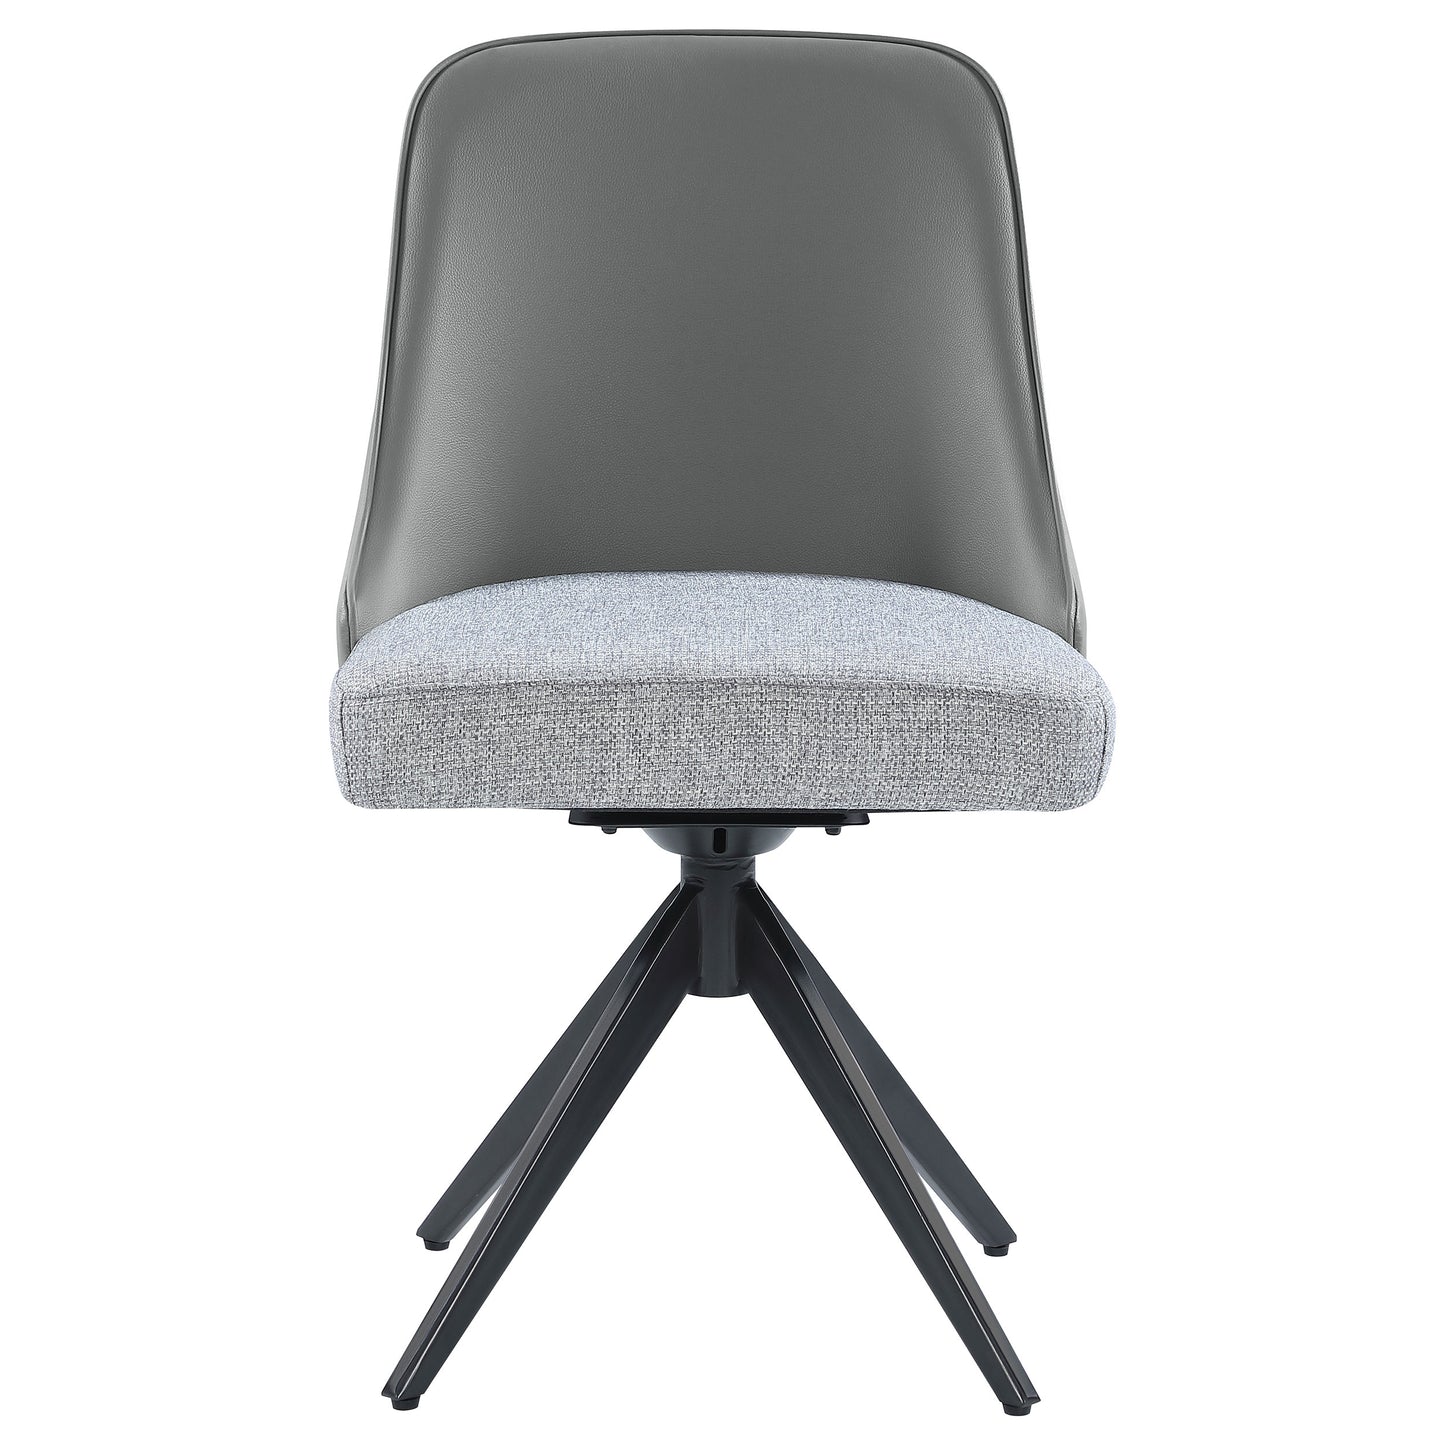 Paulita Upholstered Swivel Side Chairs (Set of 2) Grey and Gunmetal